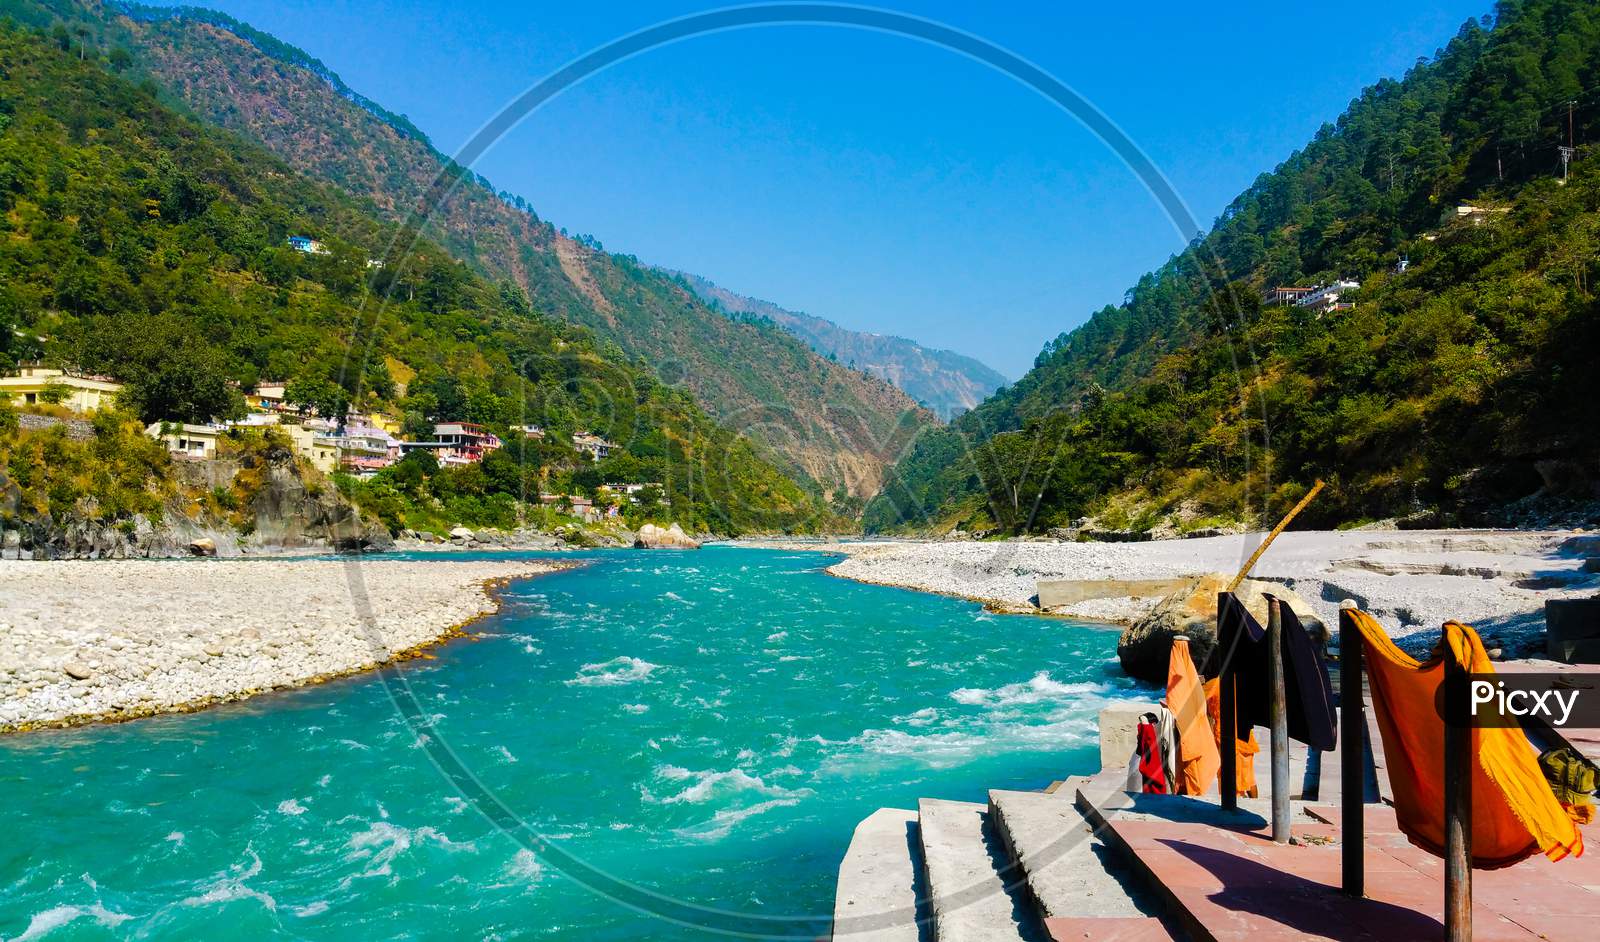 Ganga river flows through Himalayas in India.